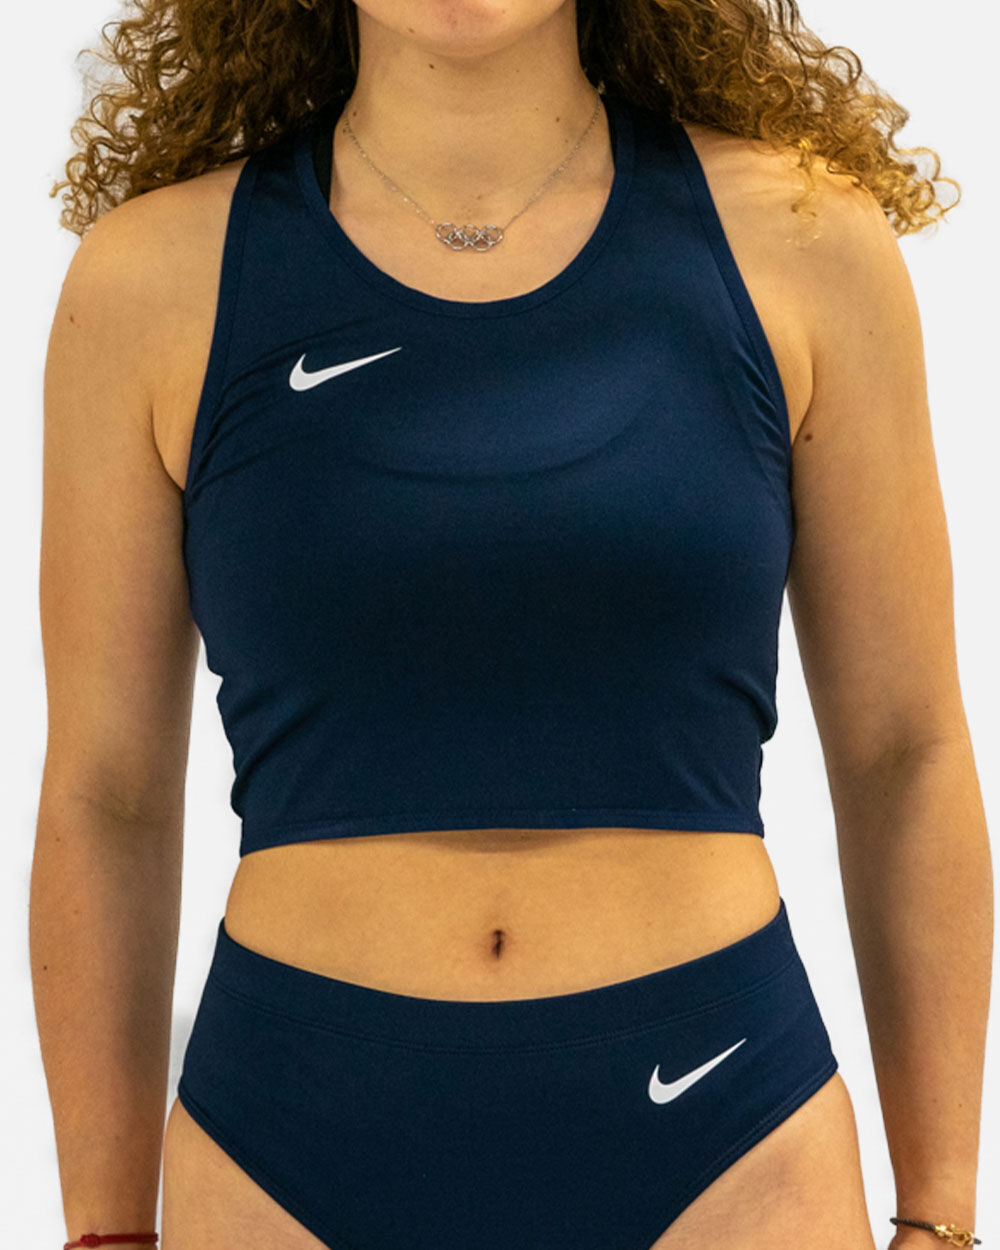 Camiseta sin mangas de running Nike Stock Azul Marino Mujeres - NT0312-451